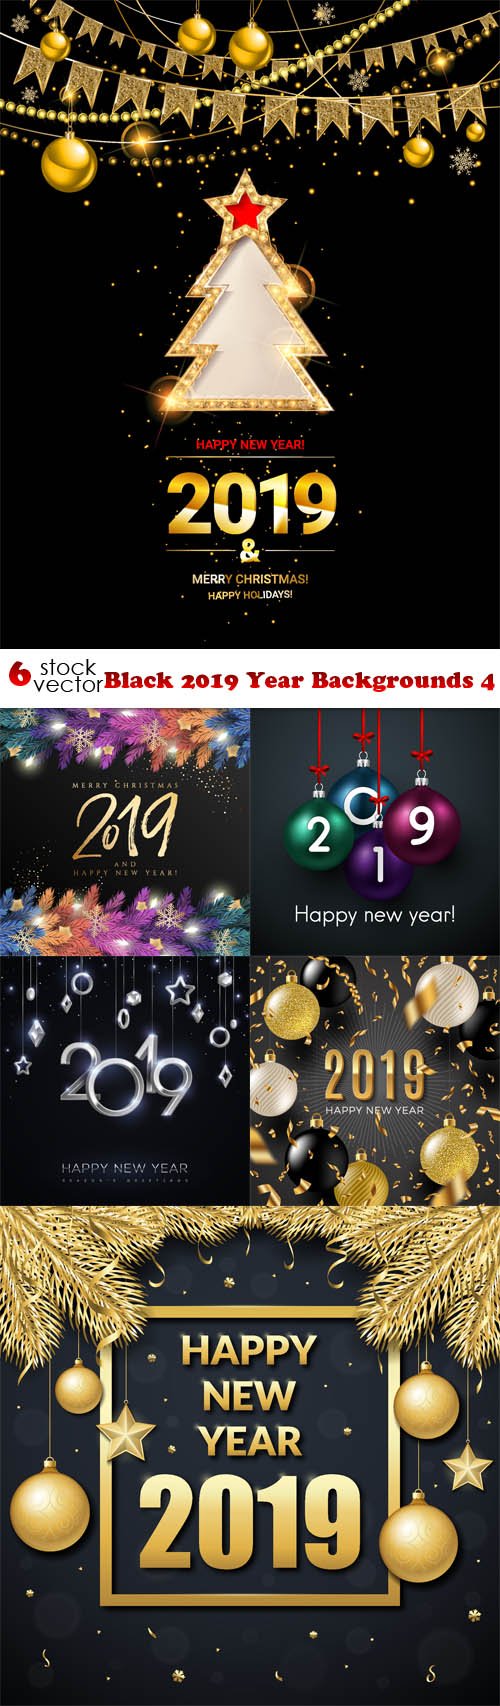 Vectors - Black 2019 Year Backgrounds 4